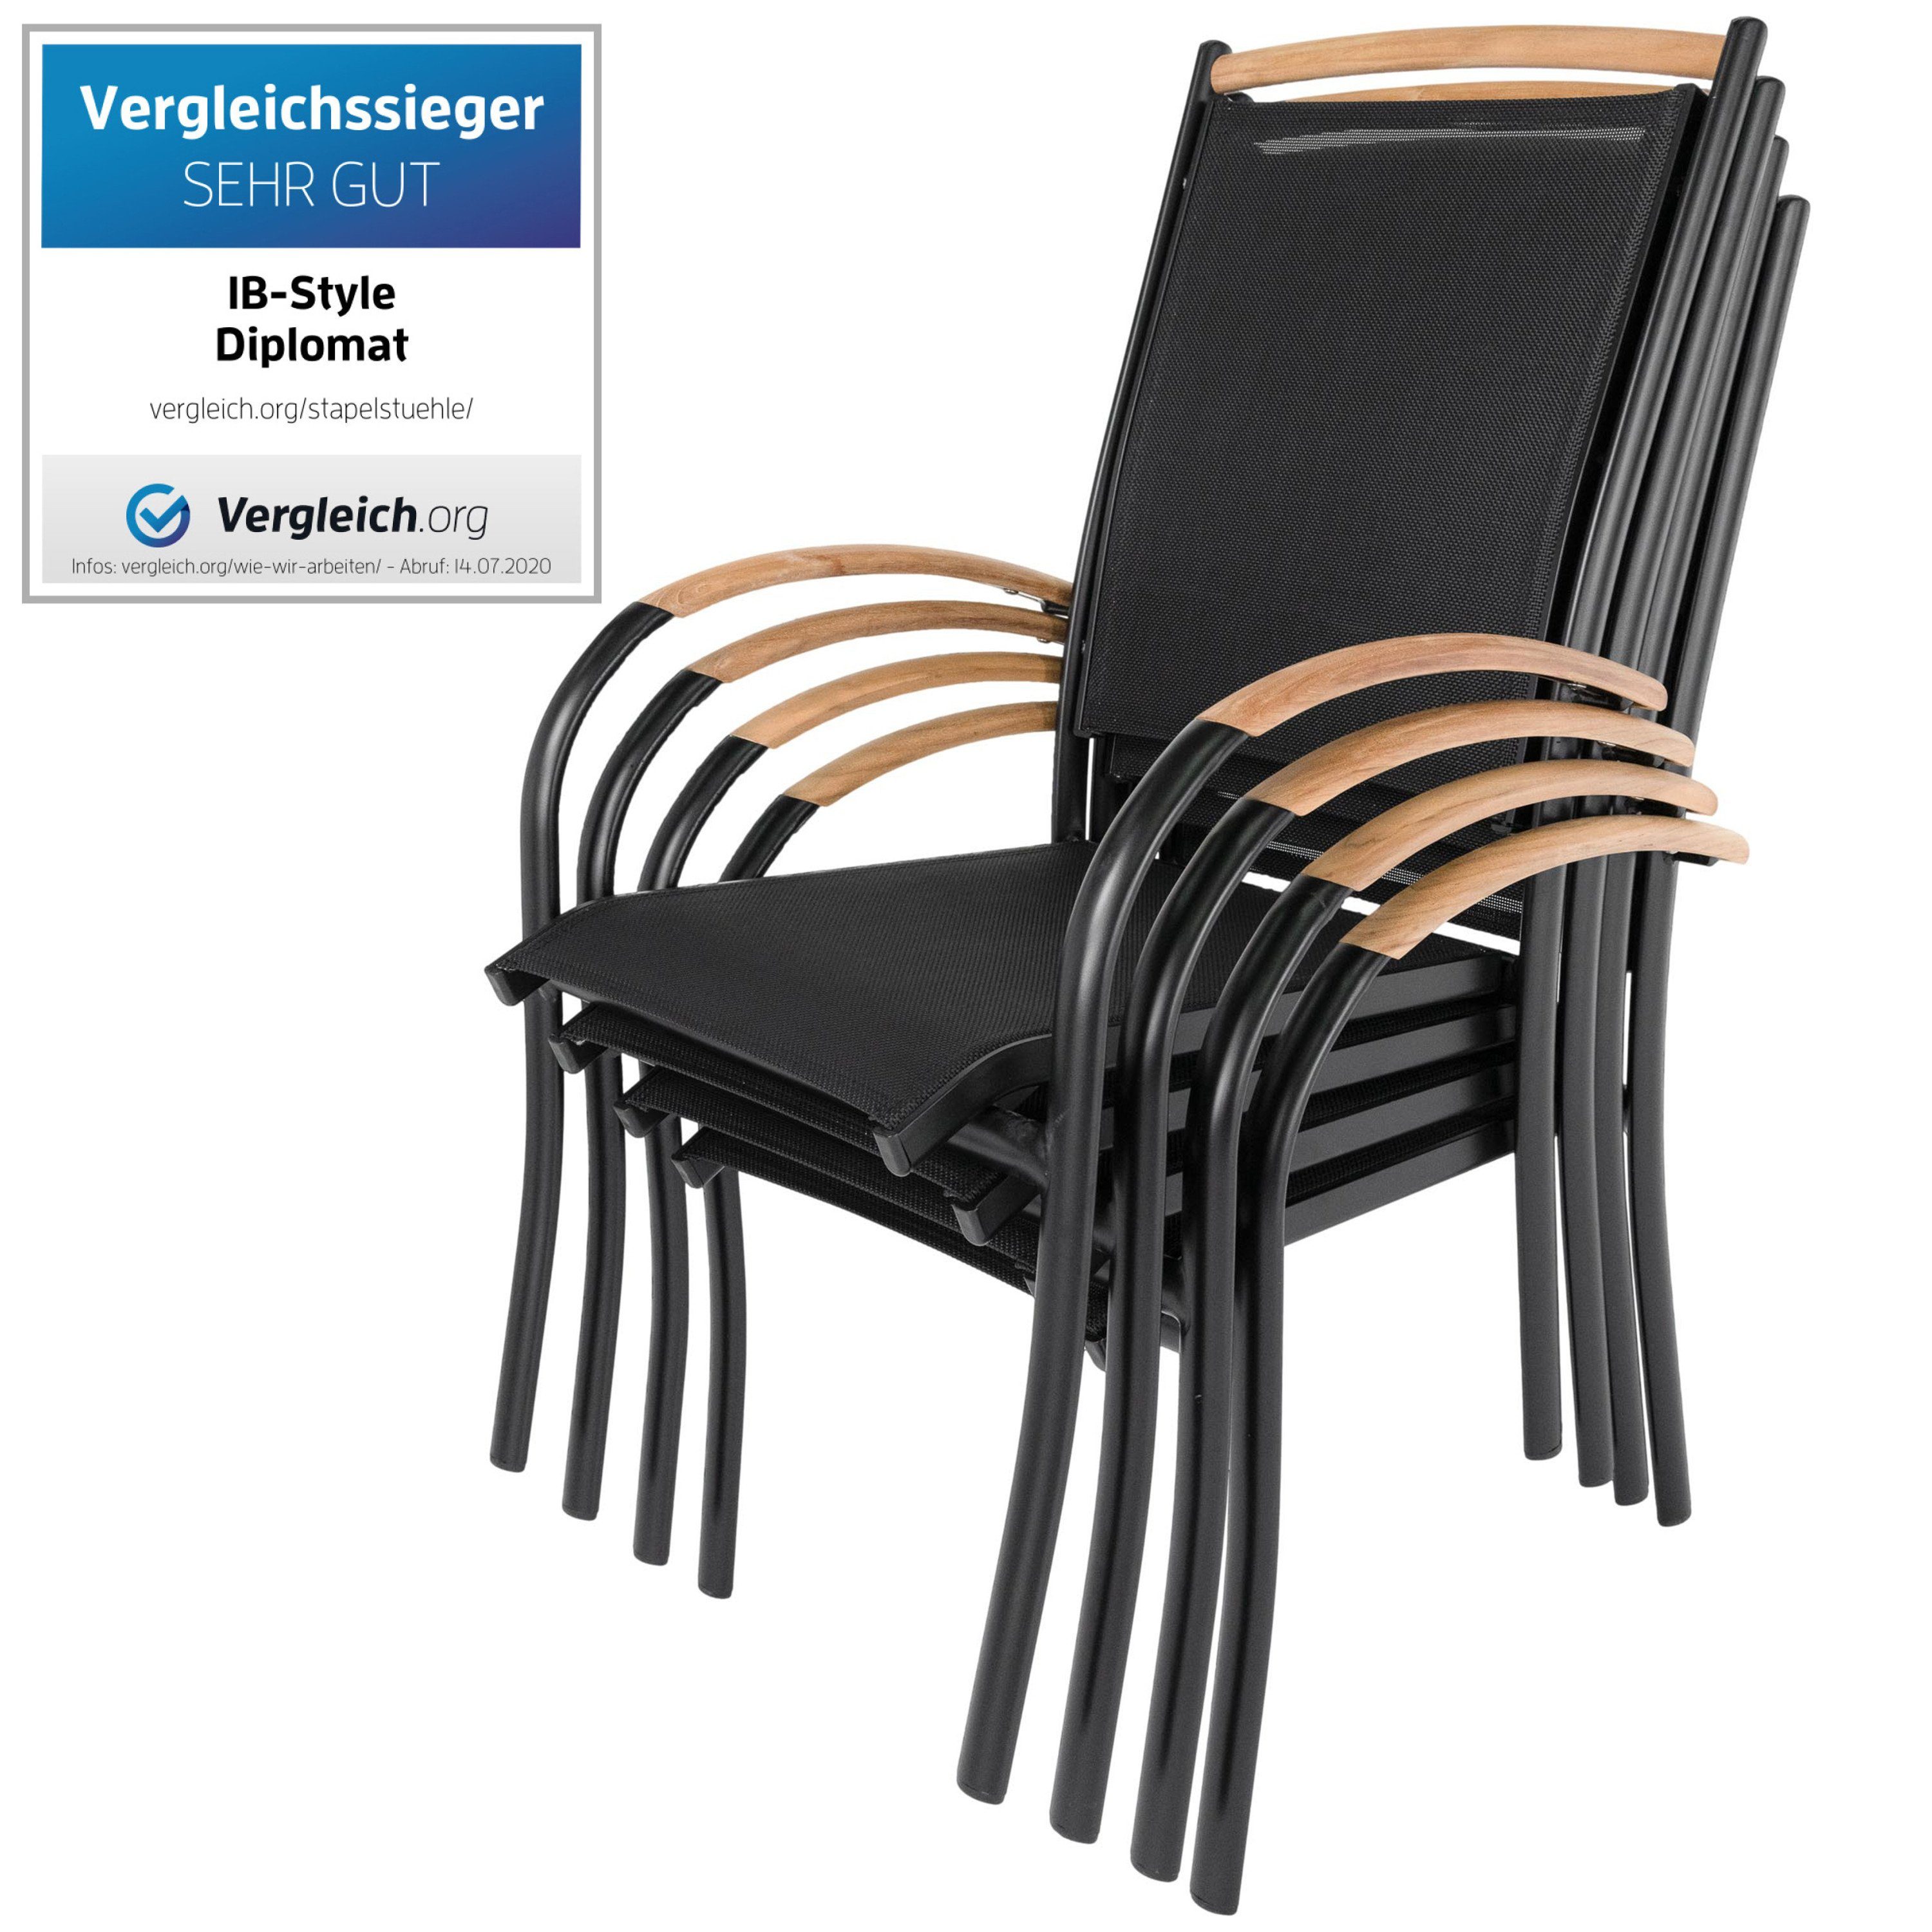 ib style Gartenstuhl Diplomat Stapelstuhl schwarz / teak Set (Hochstuhl), Gartenstuhlset - Gartensessel - Stapelbar - mehrfach gewebt | Stühle